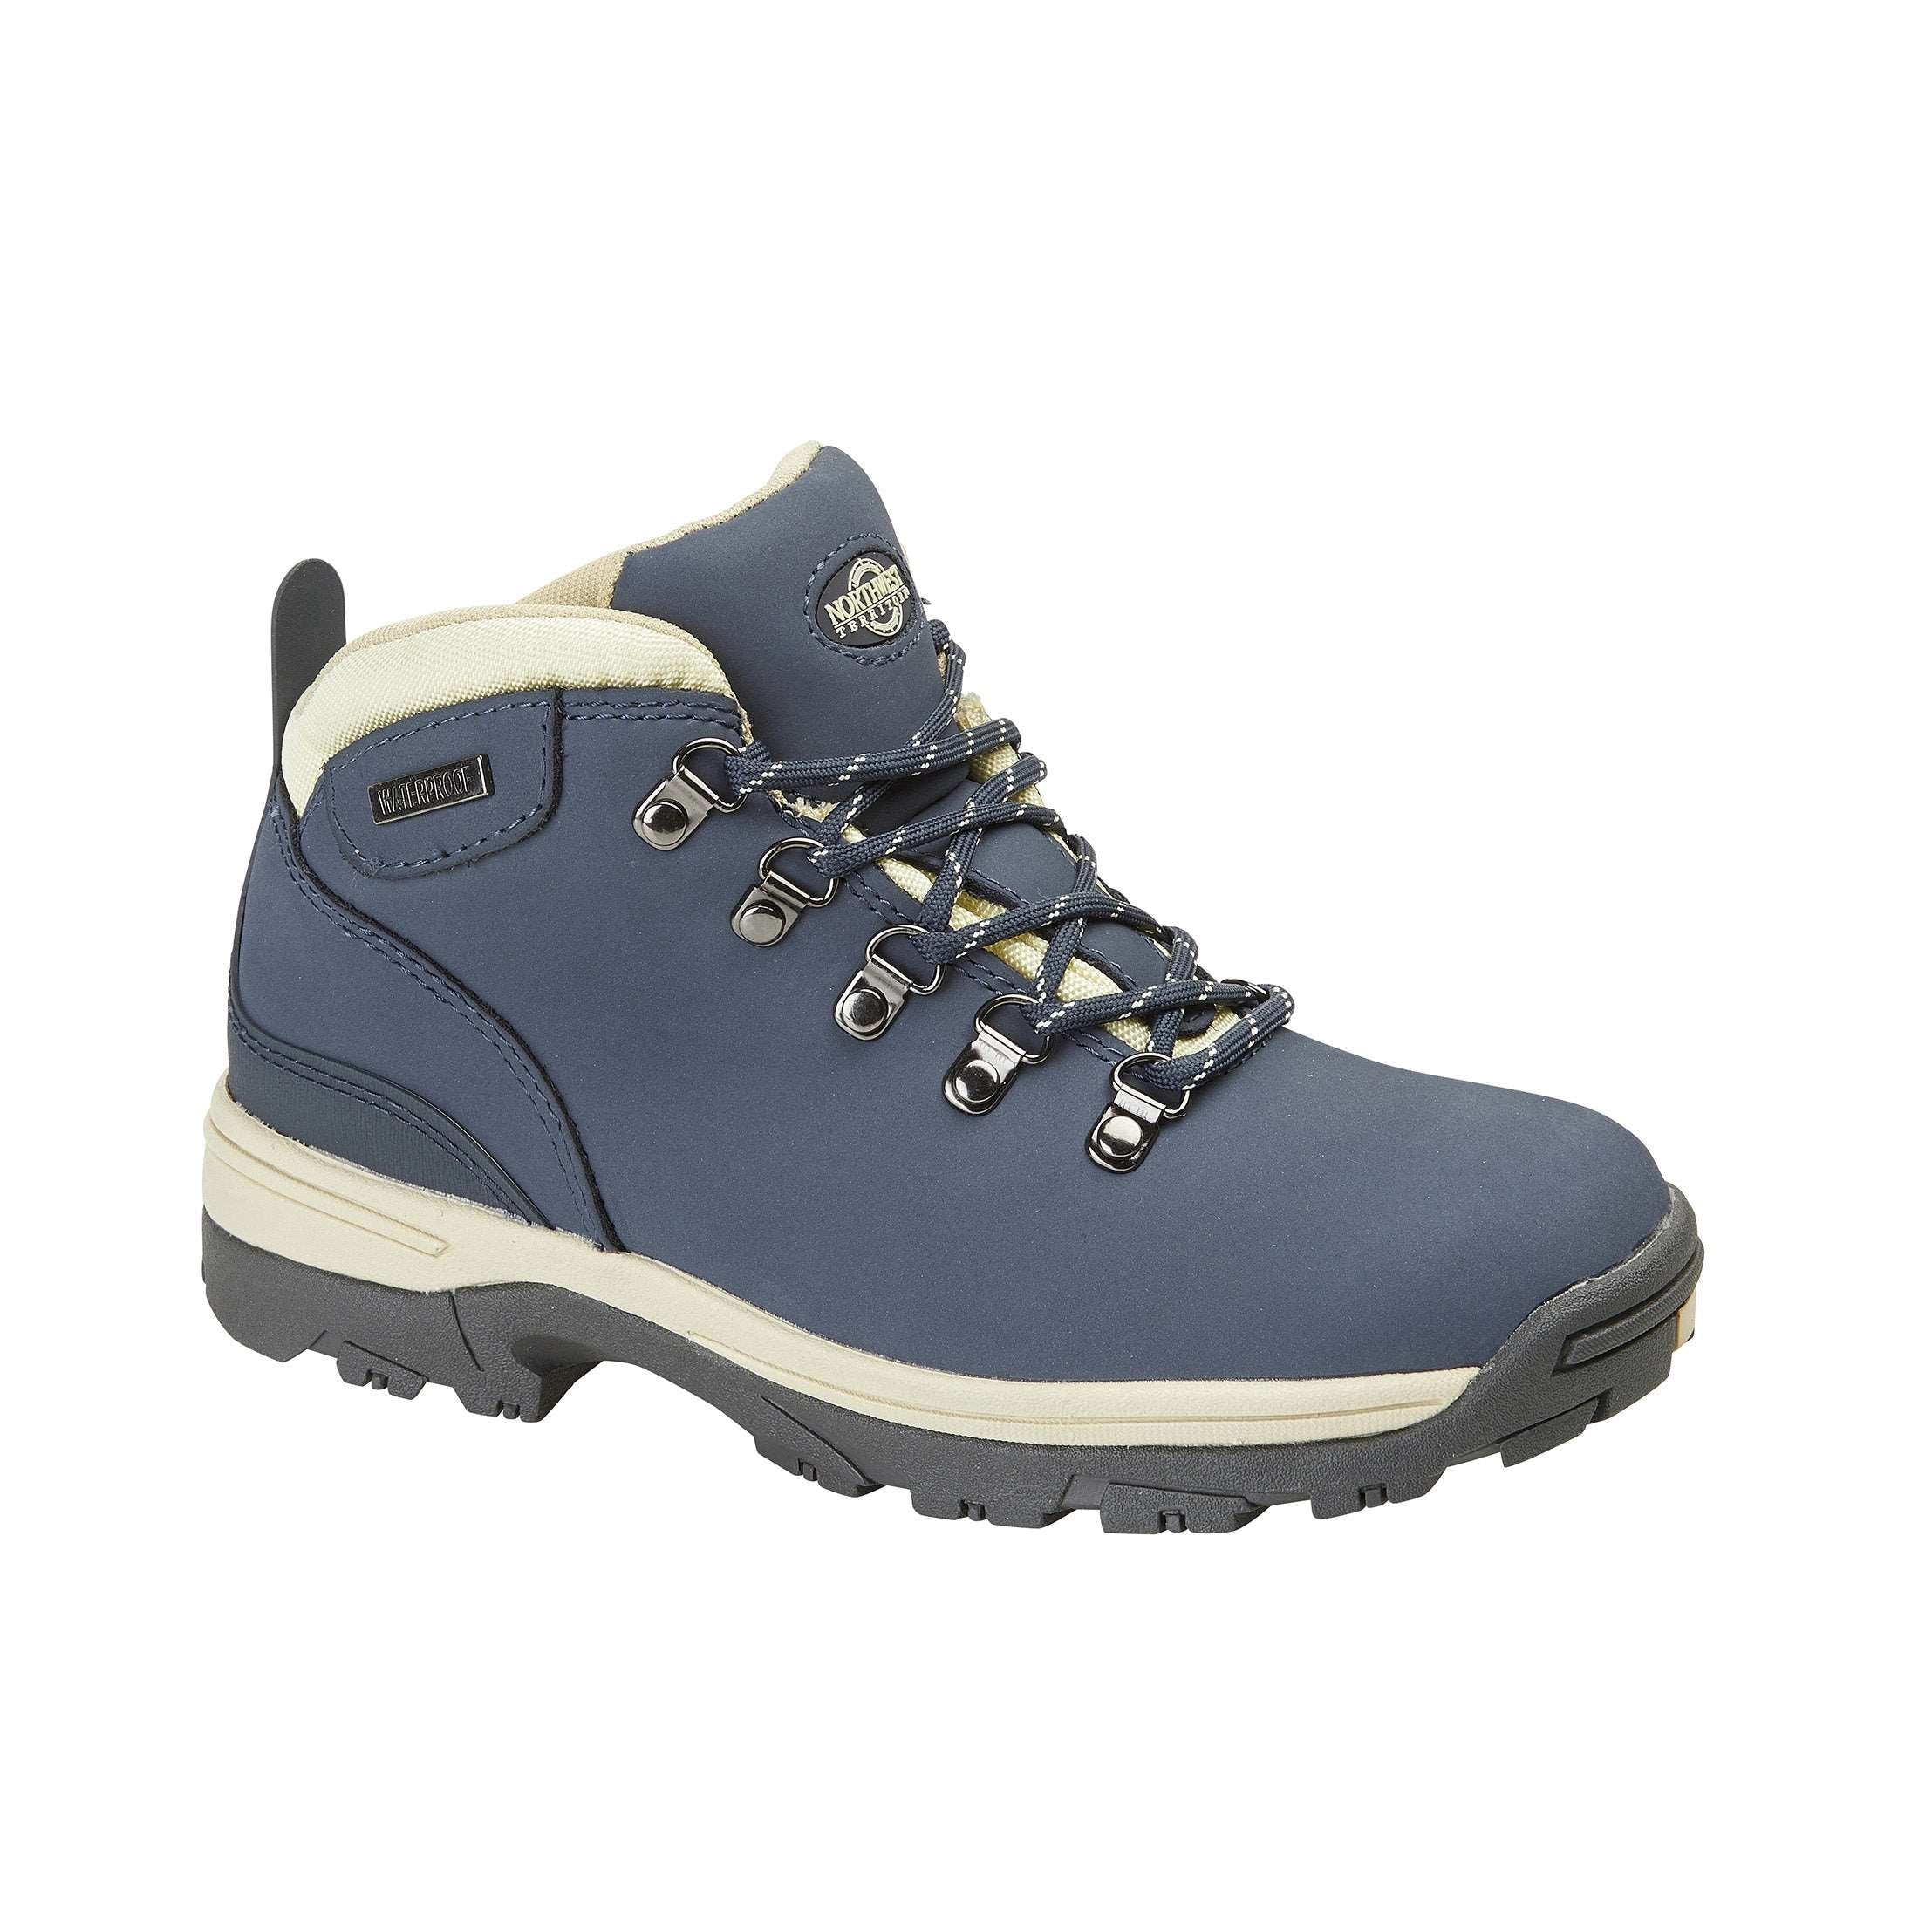 Trek Nubuck Leather Waterproof Walking And Hiking Boots